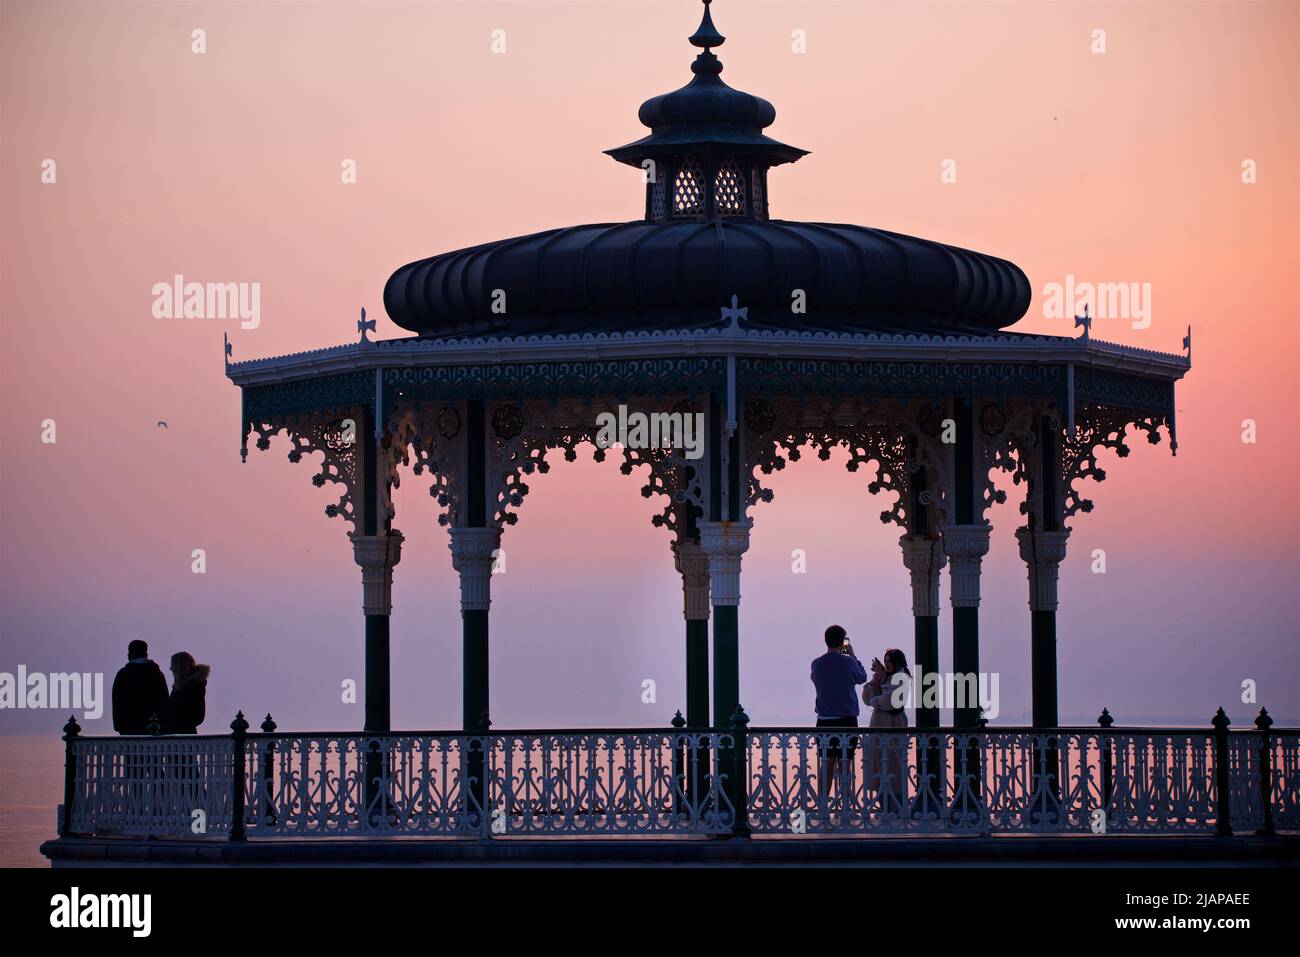 Brighton's Victorian Bandstand. Brighton & Hove, East Sussex, England. Dunkel-rosa Himmel in der Dämmerung. Stockfoto